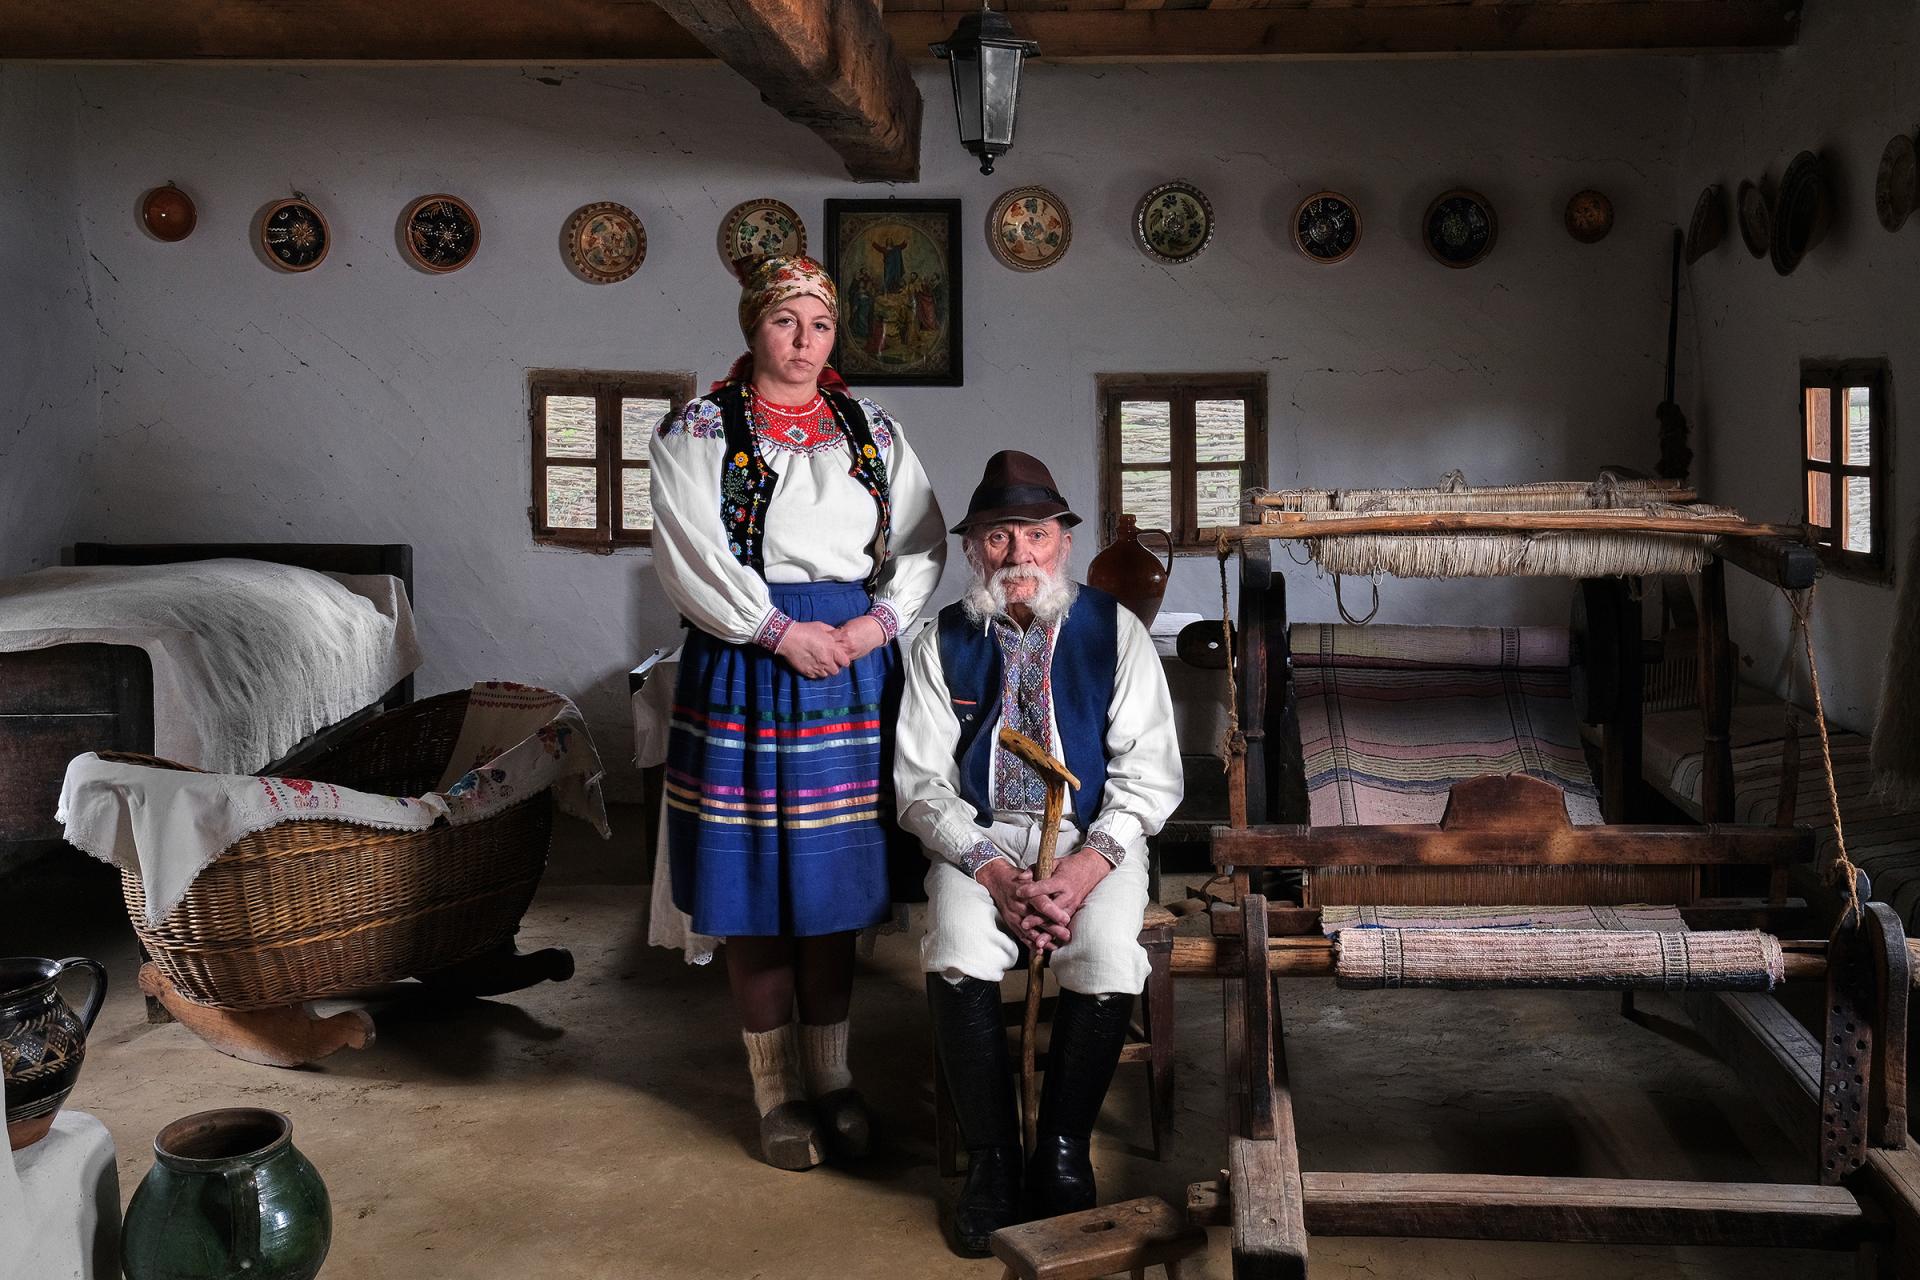 European Photography Awards Winner - Cultural ethnos of Transcarpathia, Ukraine.